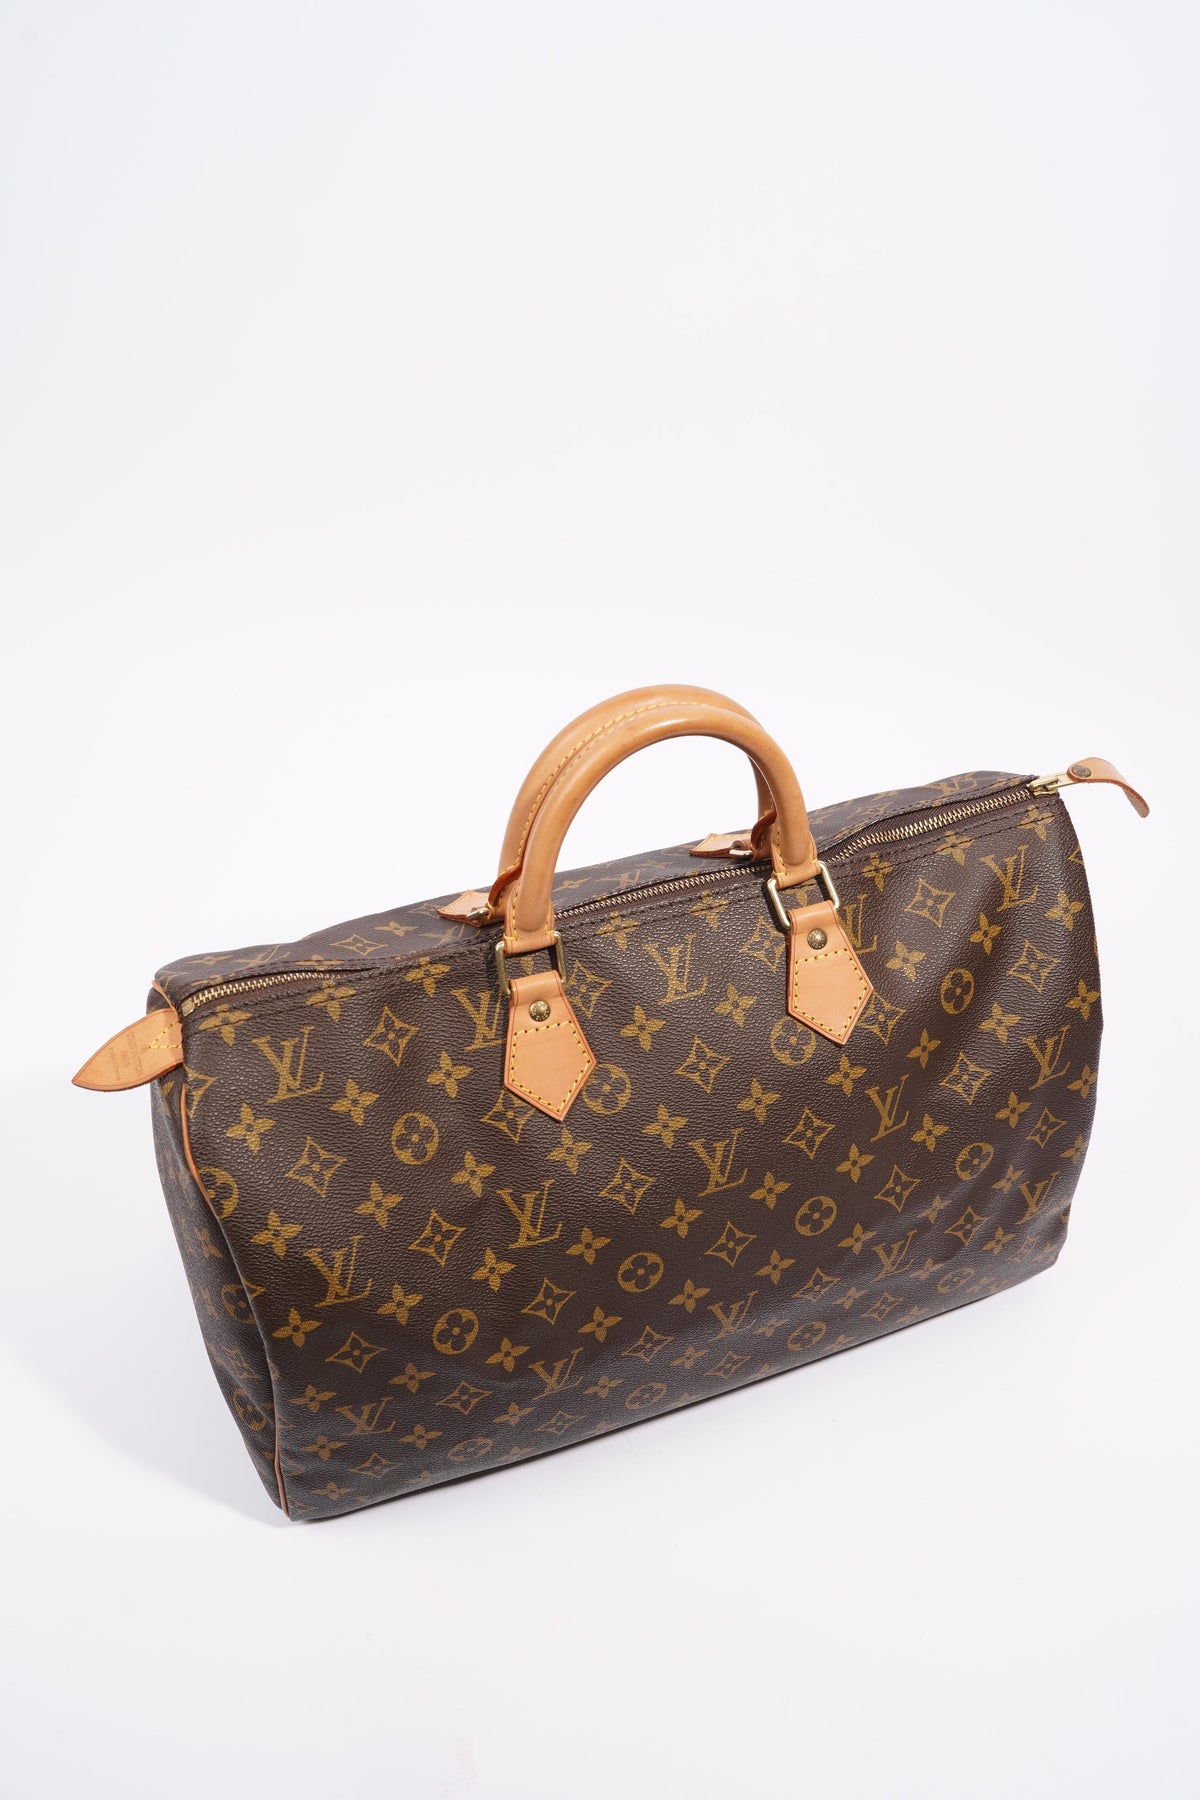 Louis Vuitton borsa bauletto Speedy vintage monogram 40. - La Belle Epoque